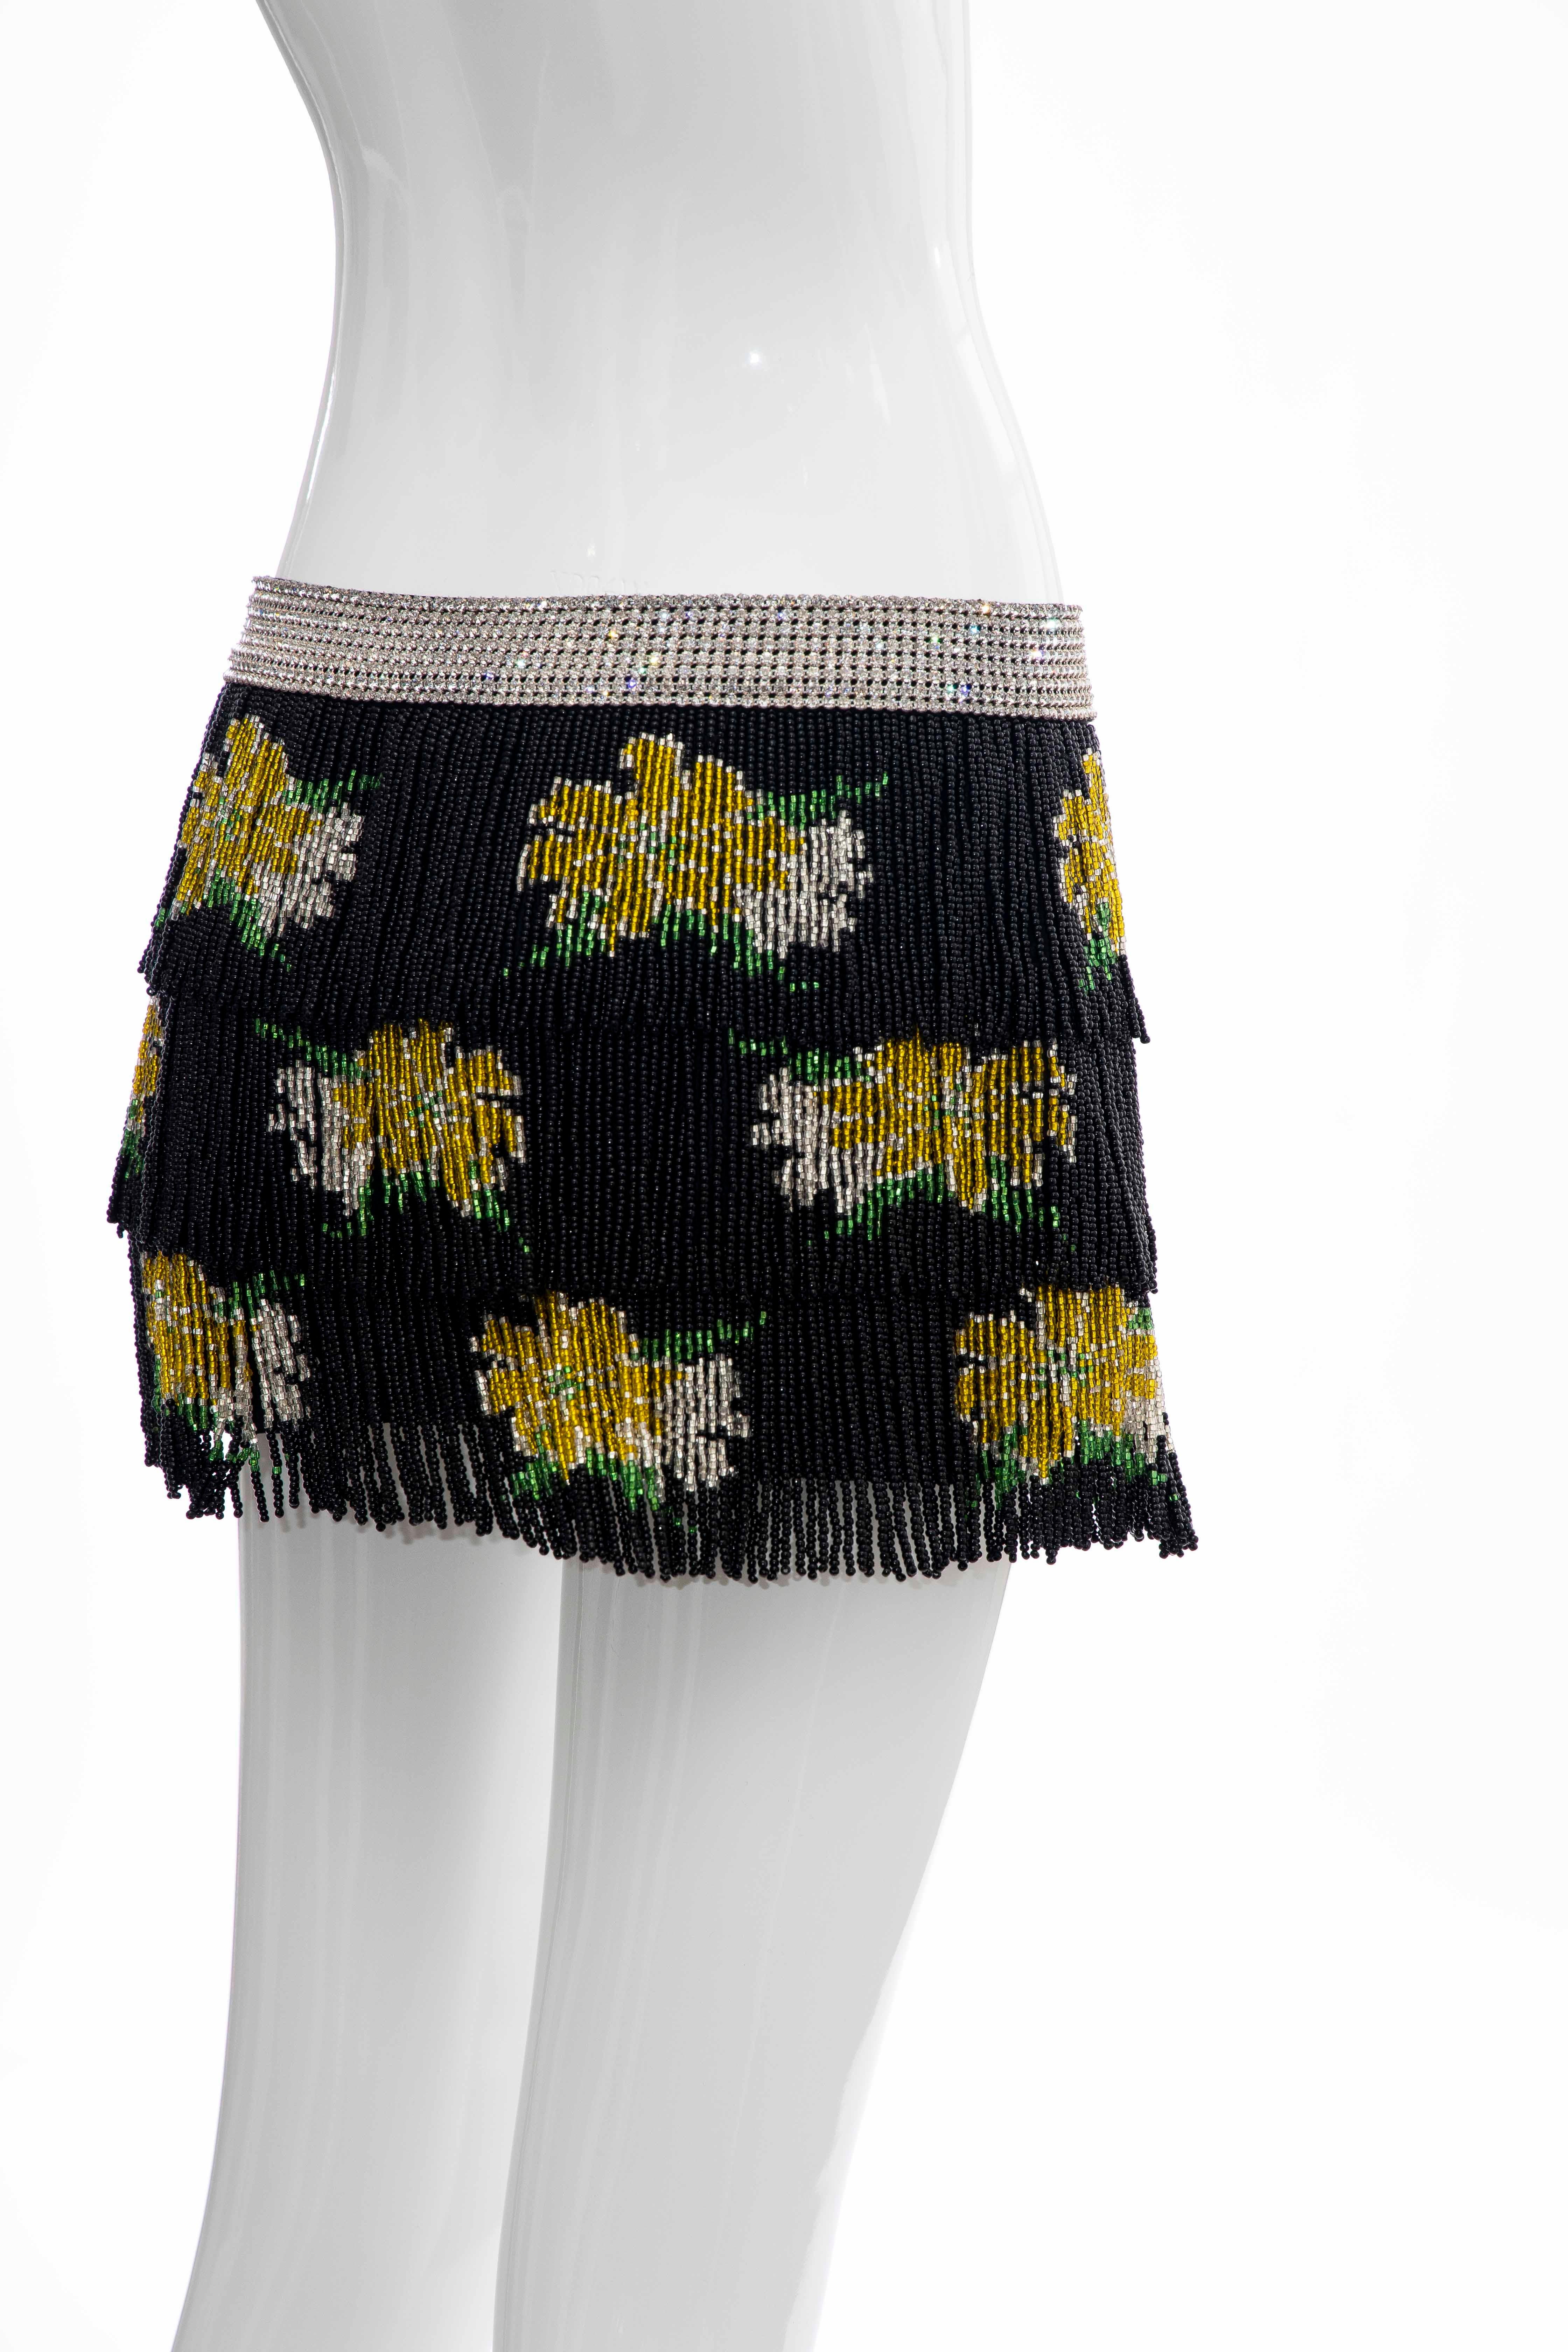 Dolce & Gabbana Runway Black Silk Beaded Fringe Diamanté Mini-Skirt, Spring 2000 In Excellent Condition For Sale In Cincinnati, OH